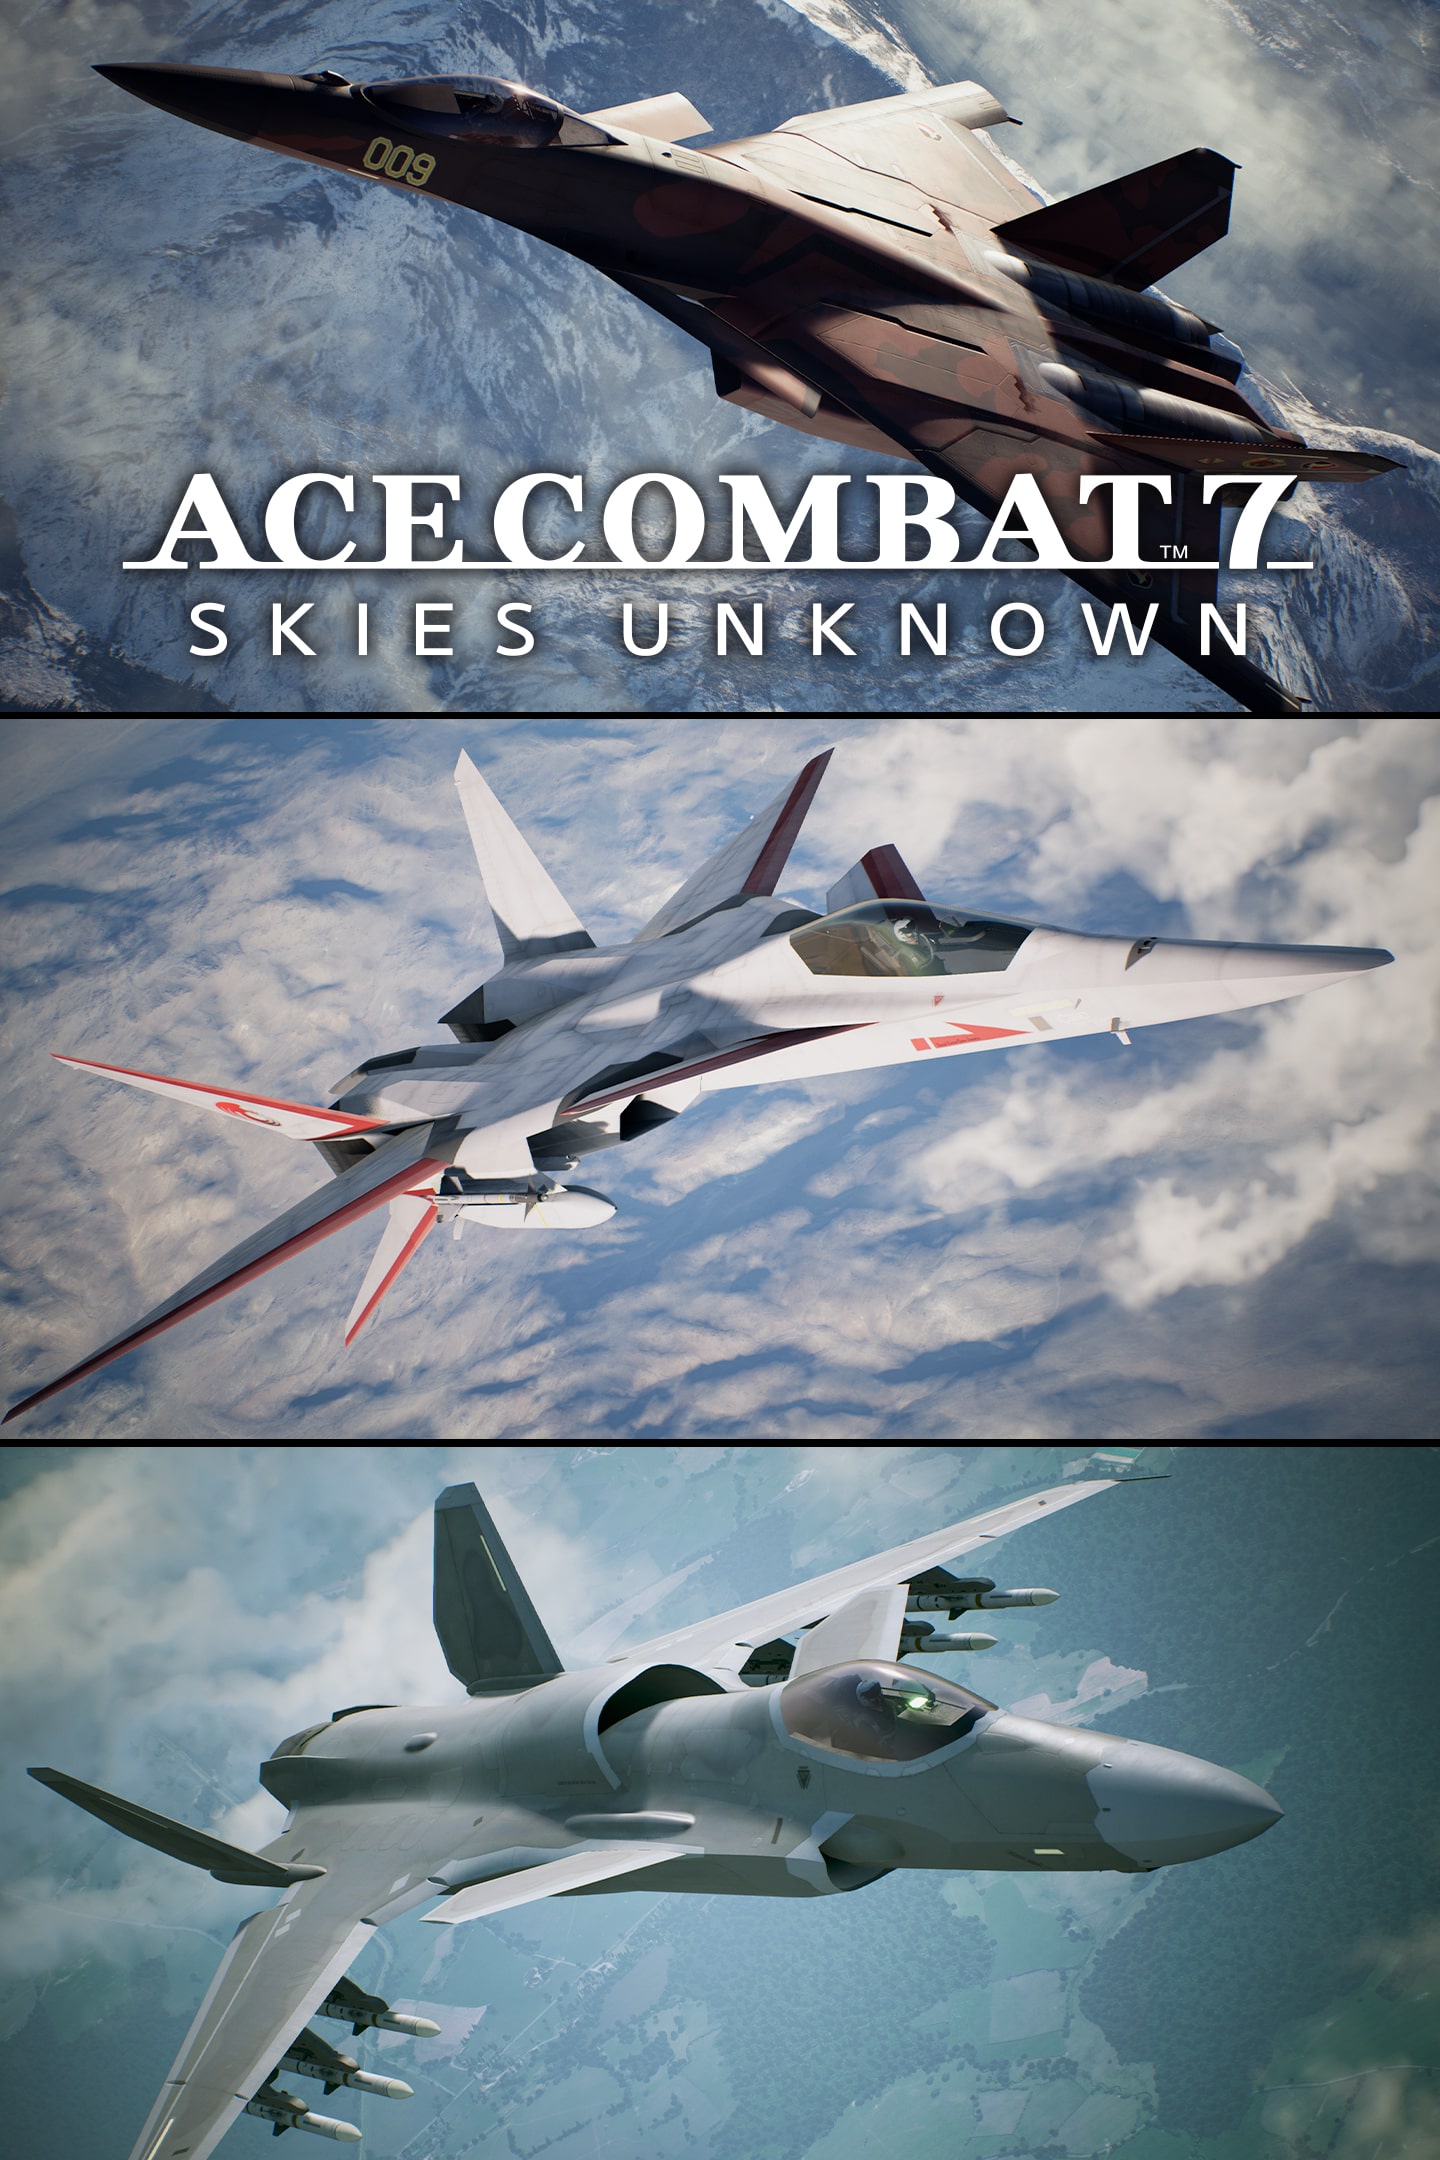 ace combat 7 price ps4